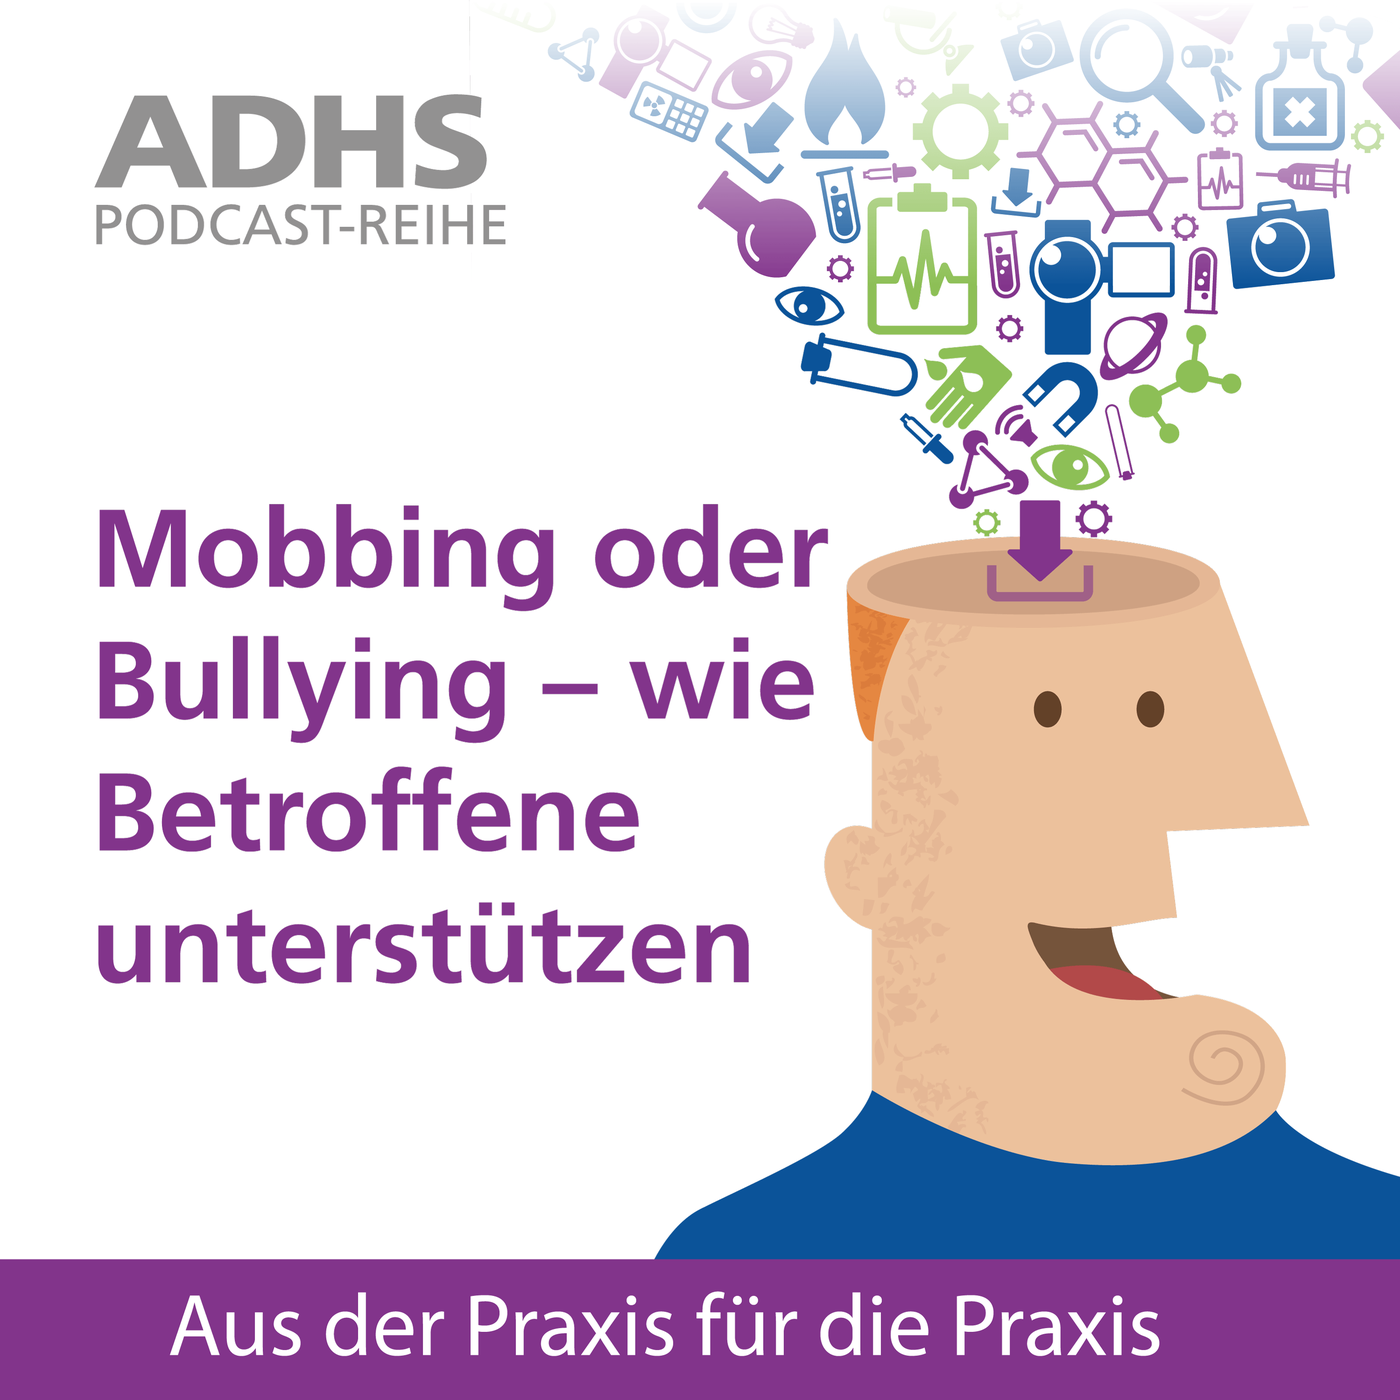 Mobbing oder Bullying – Wie Betroffene unterstützen?